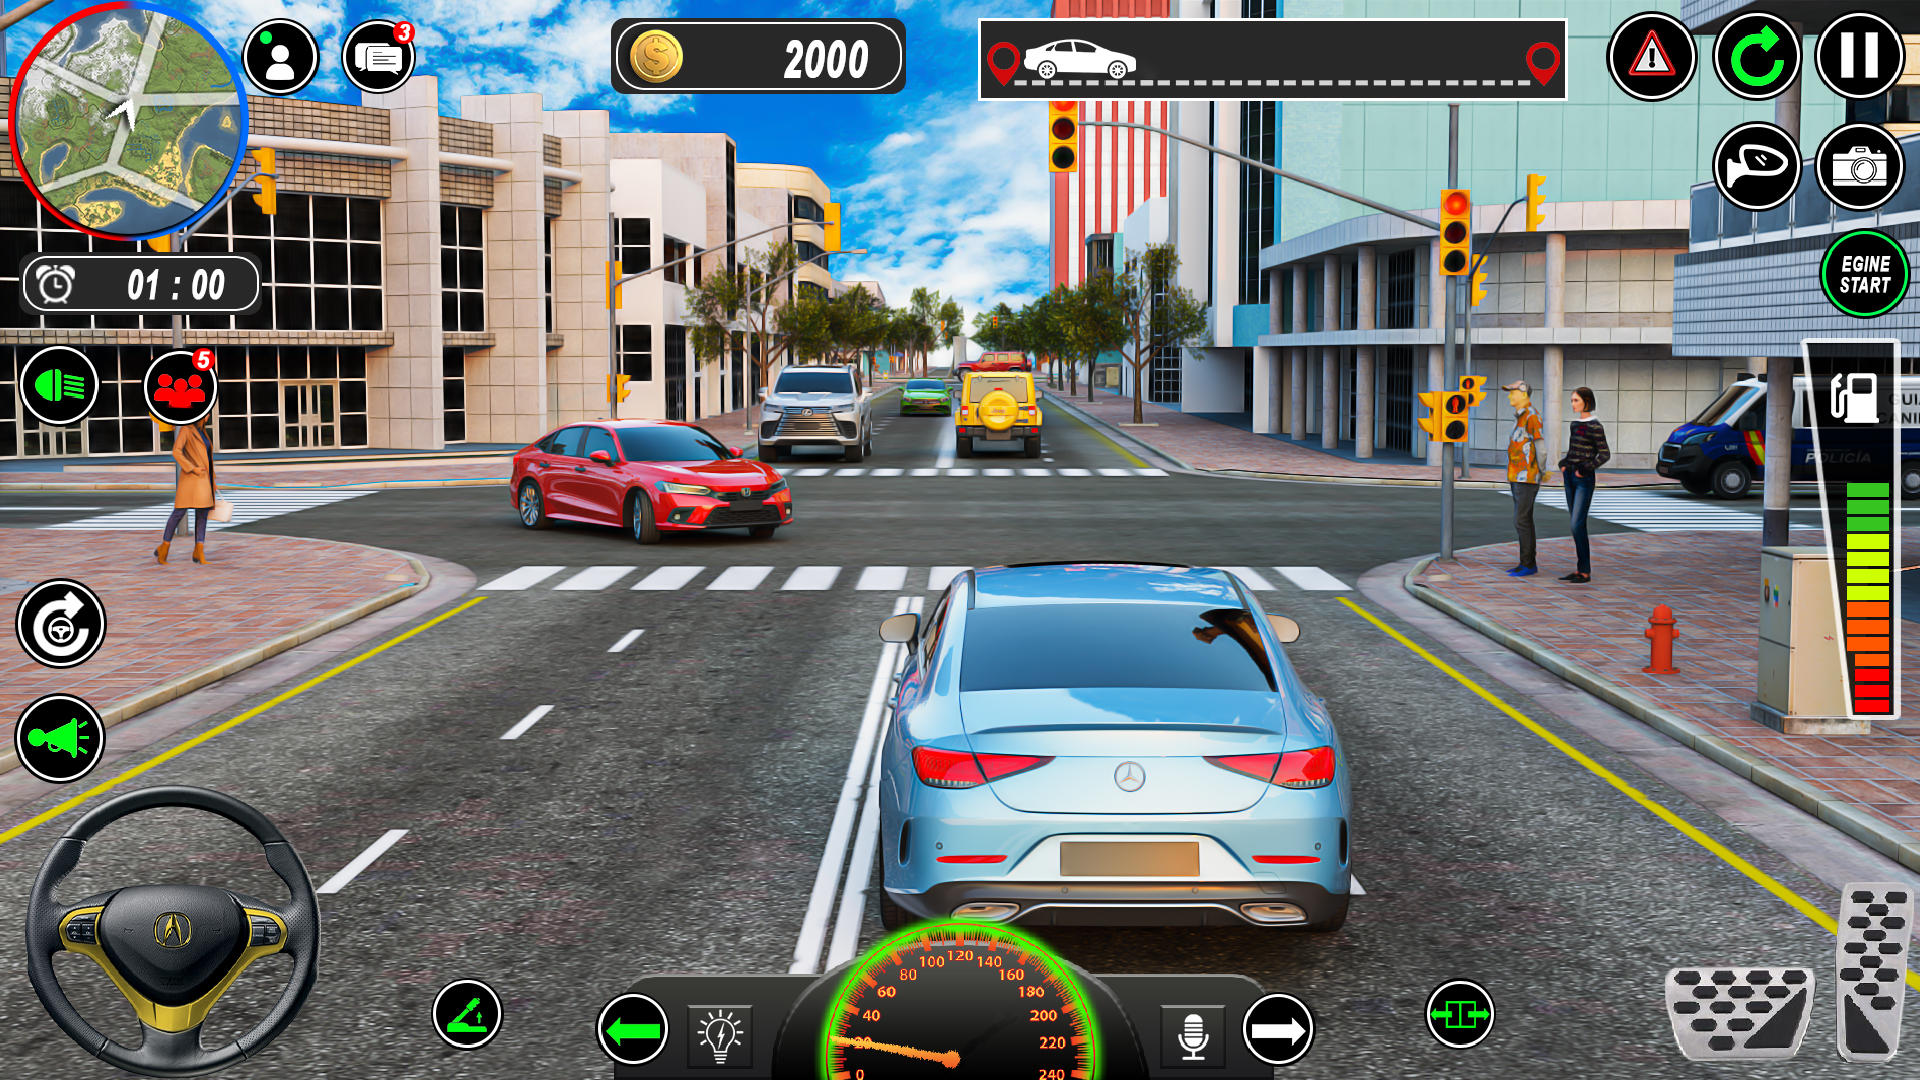 CAR DRIVING SCHOOL SIMULATOR Gameplay Part 1 - Tutorial (iOS Android) 